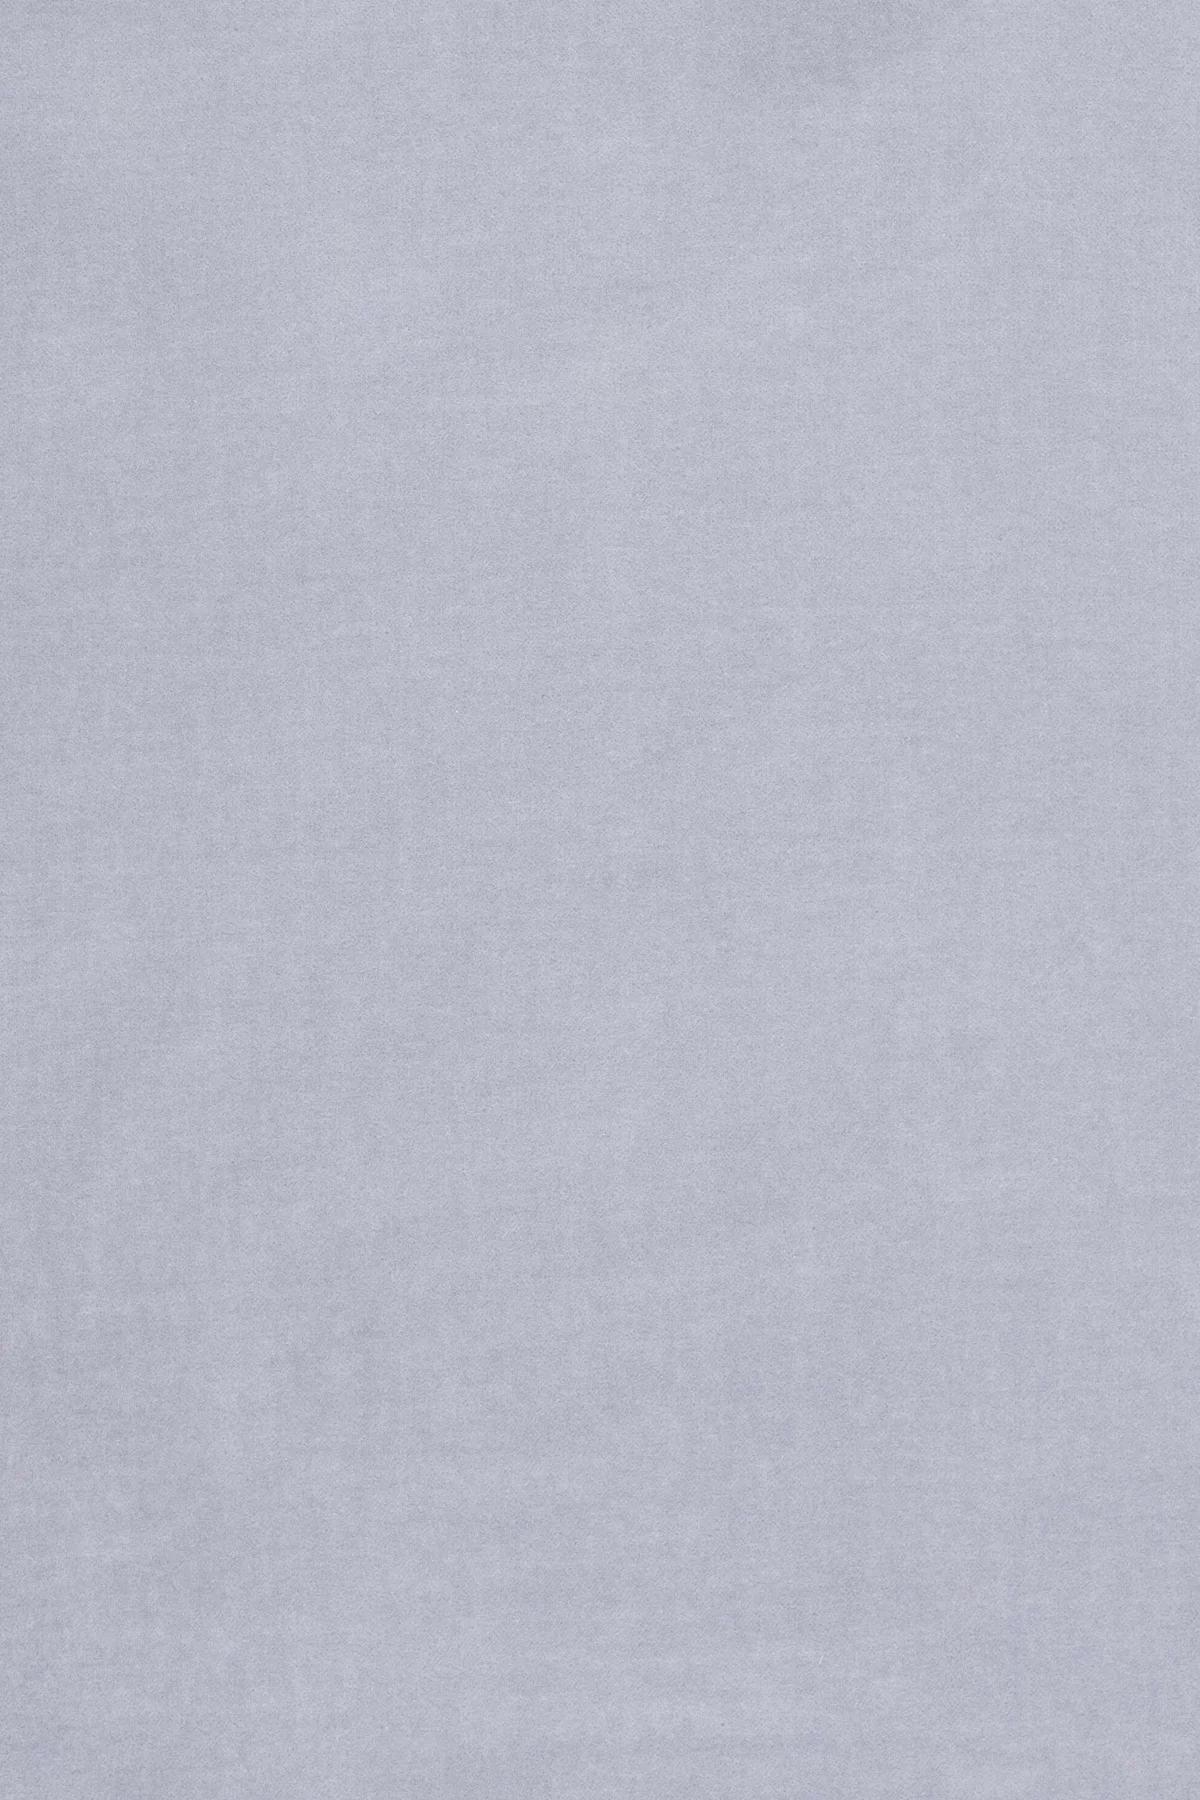 Fabric sample Harald 3 133 grey